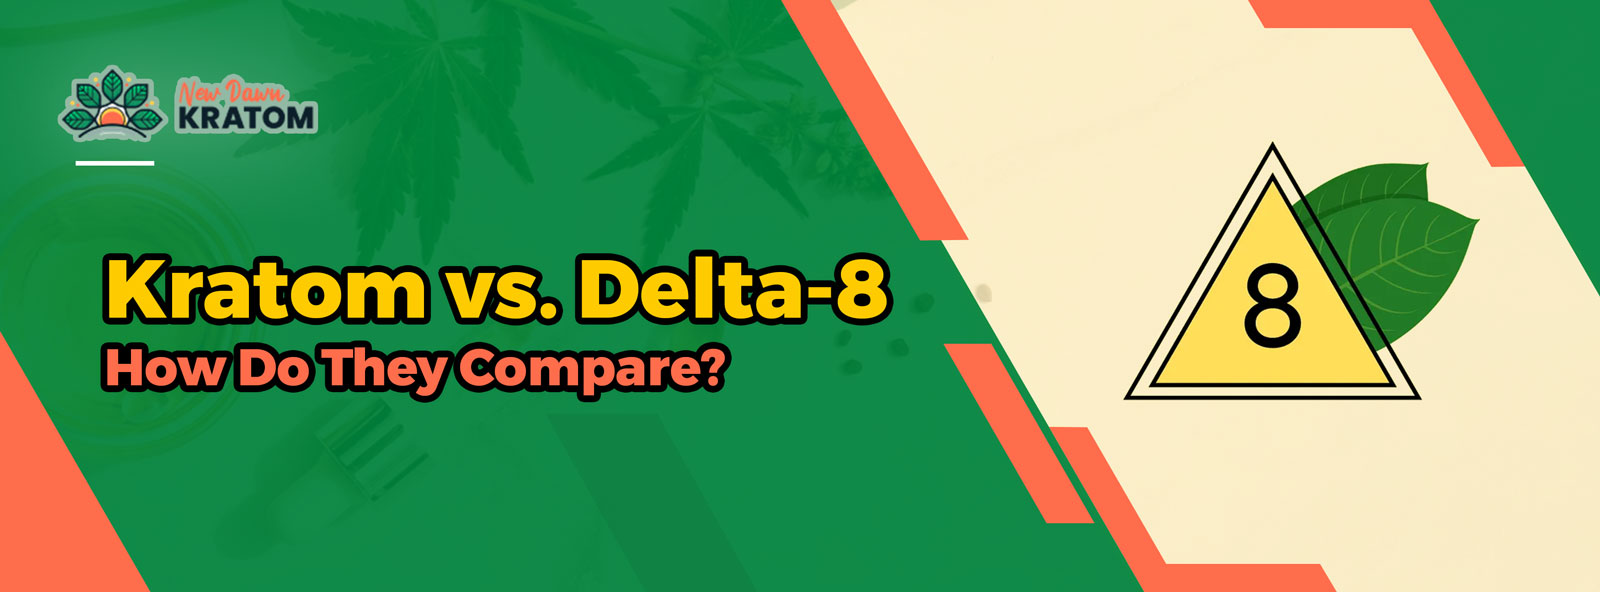 kratom vs. delta-8: how do they compare?